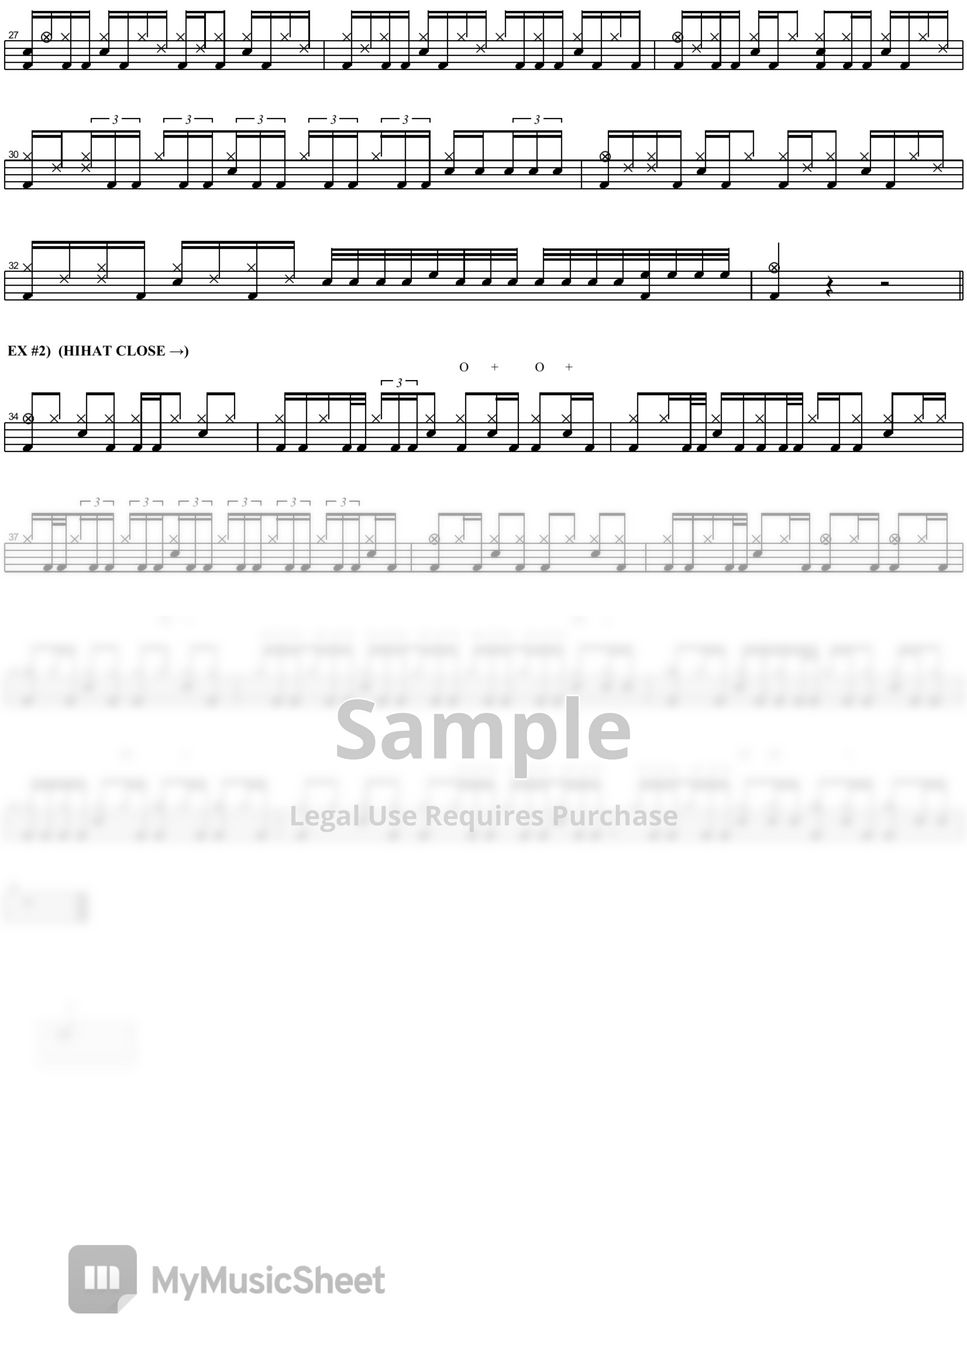 dennis chambers triplet bass groove - dennis chambers triplet bass groove by COPYDRUM